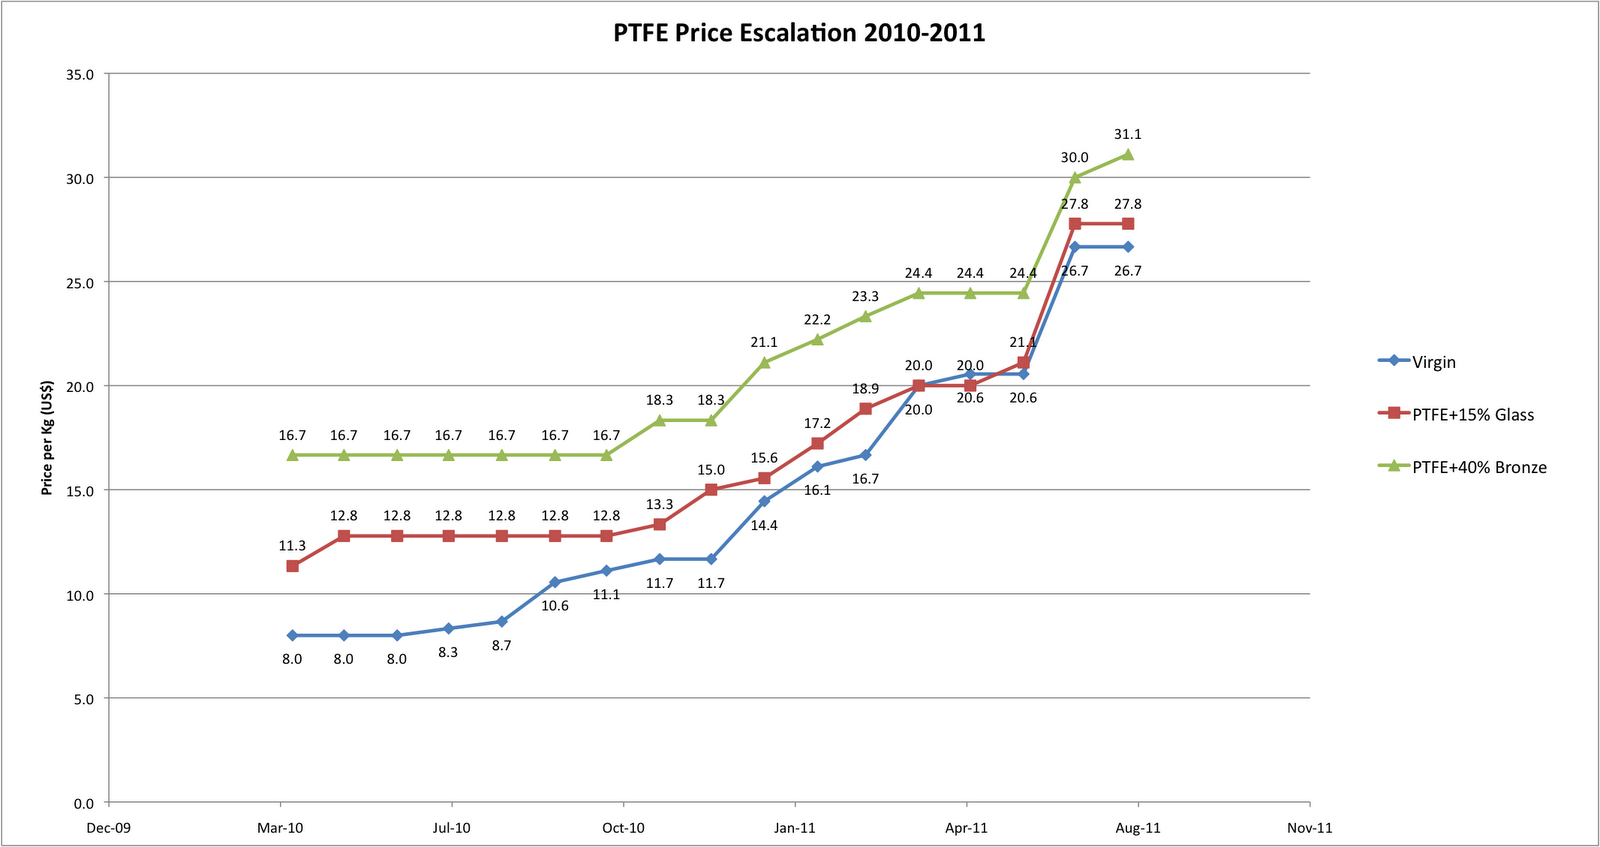 Polymer Price Chart